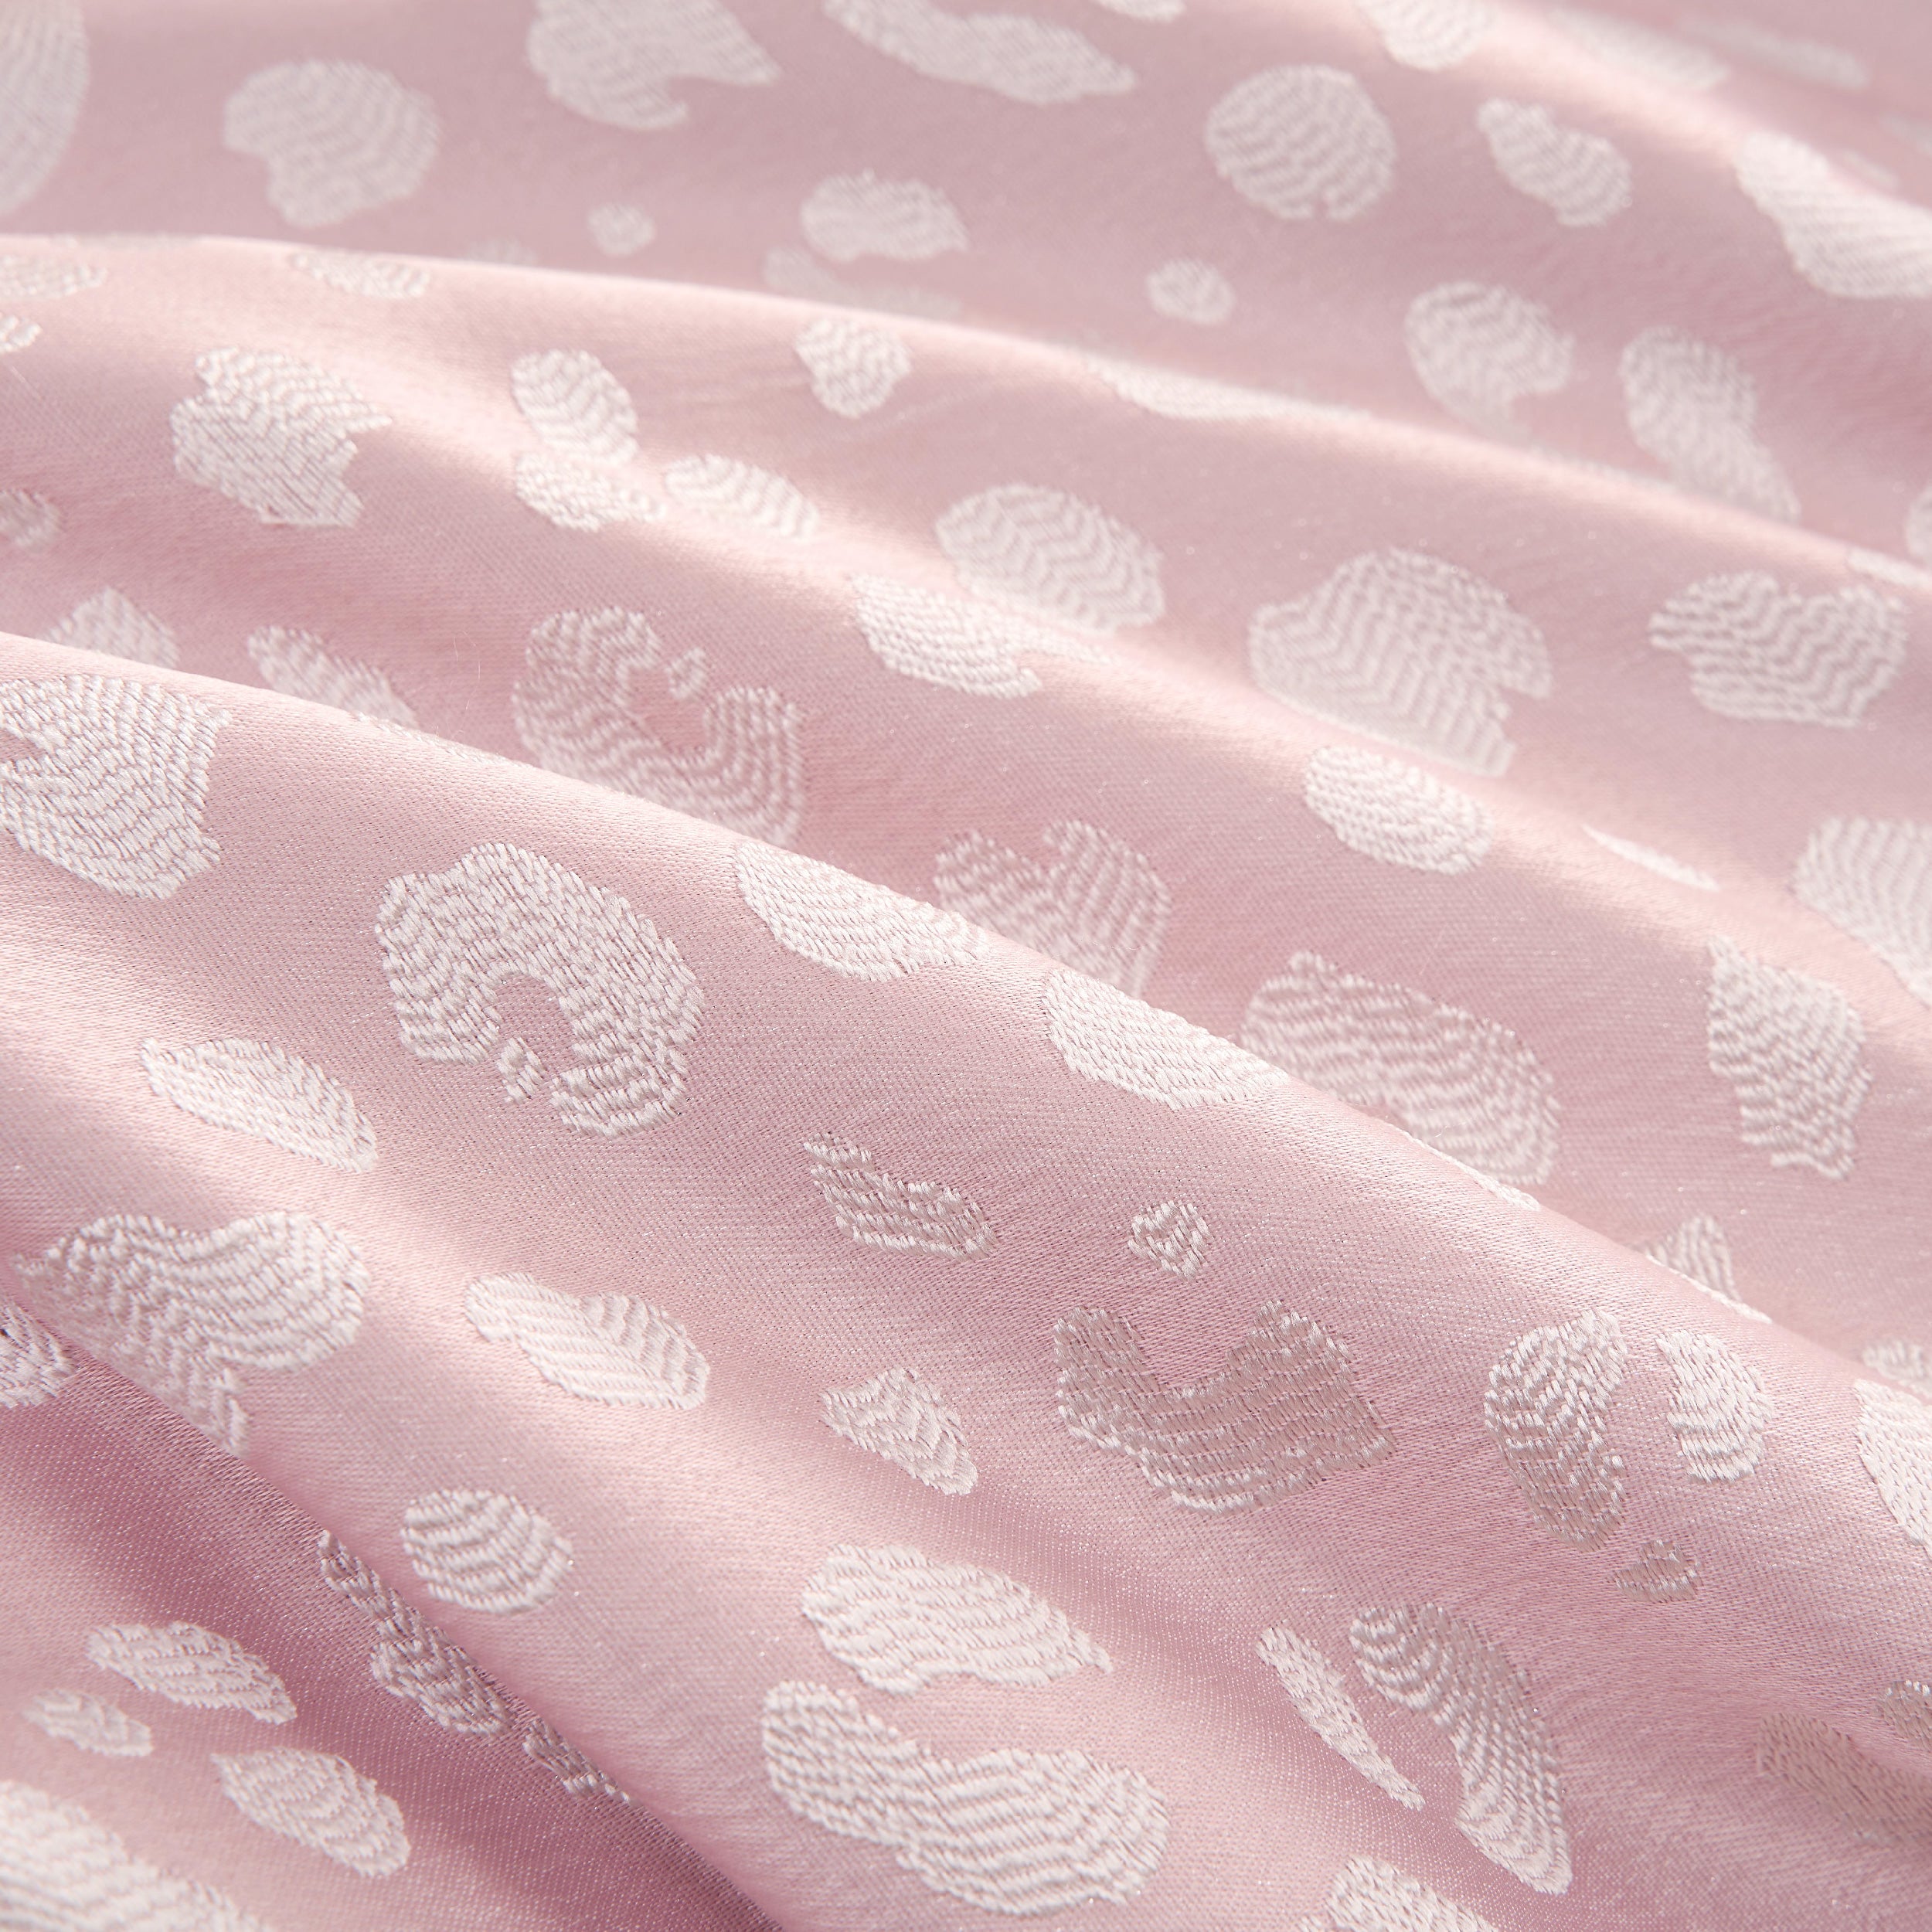 Sparkle Cheetah Jaquard Comforter Set - Juicy Couture